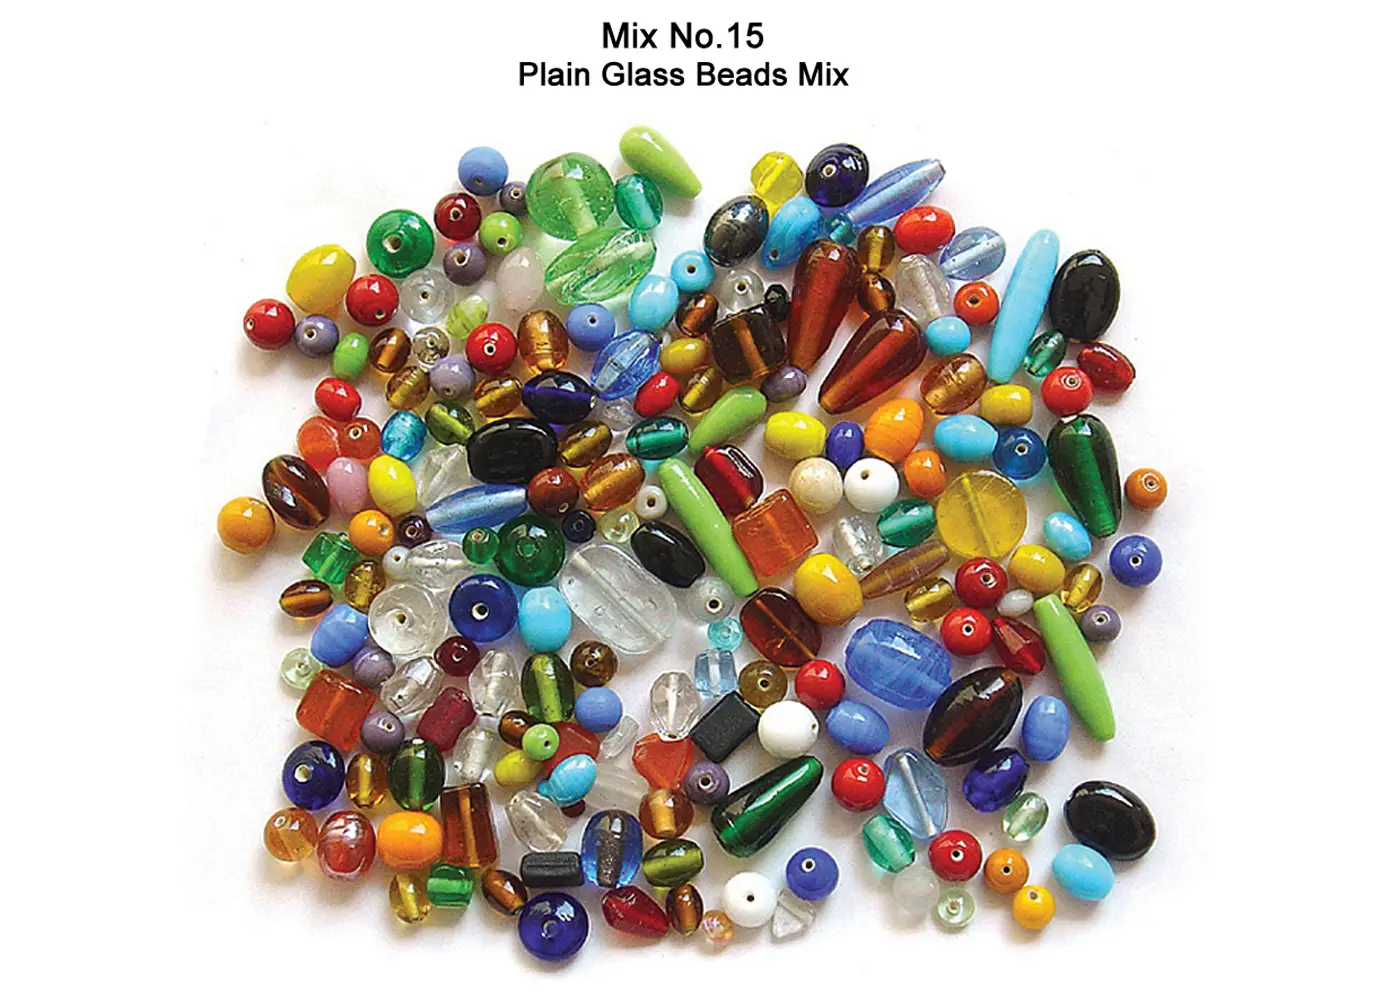 Plain Glass Beads Mix